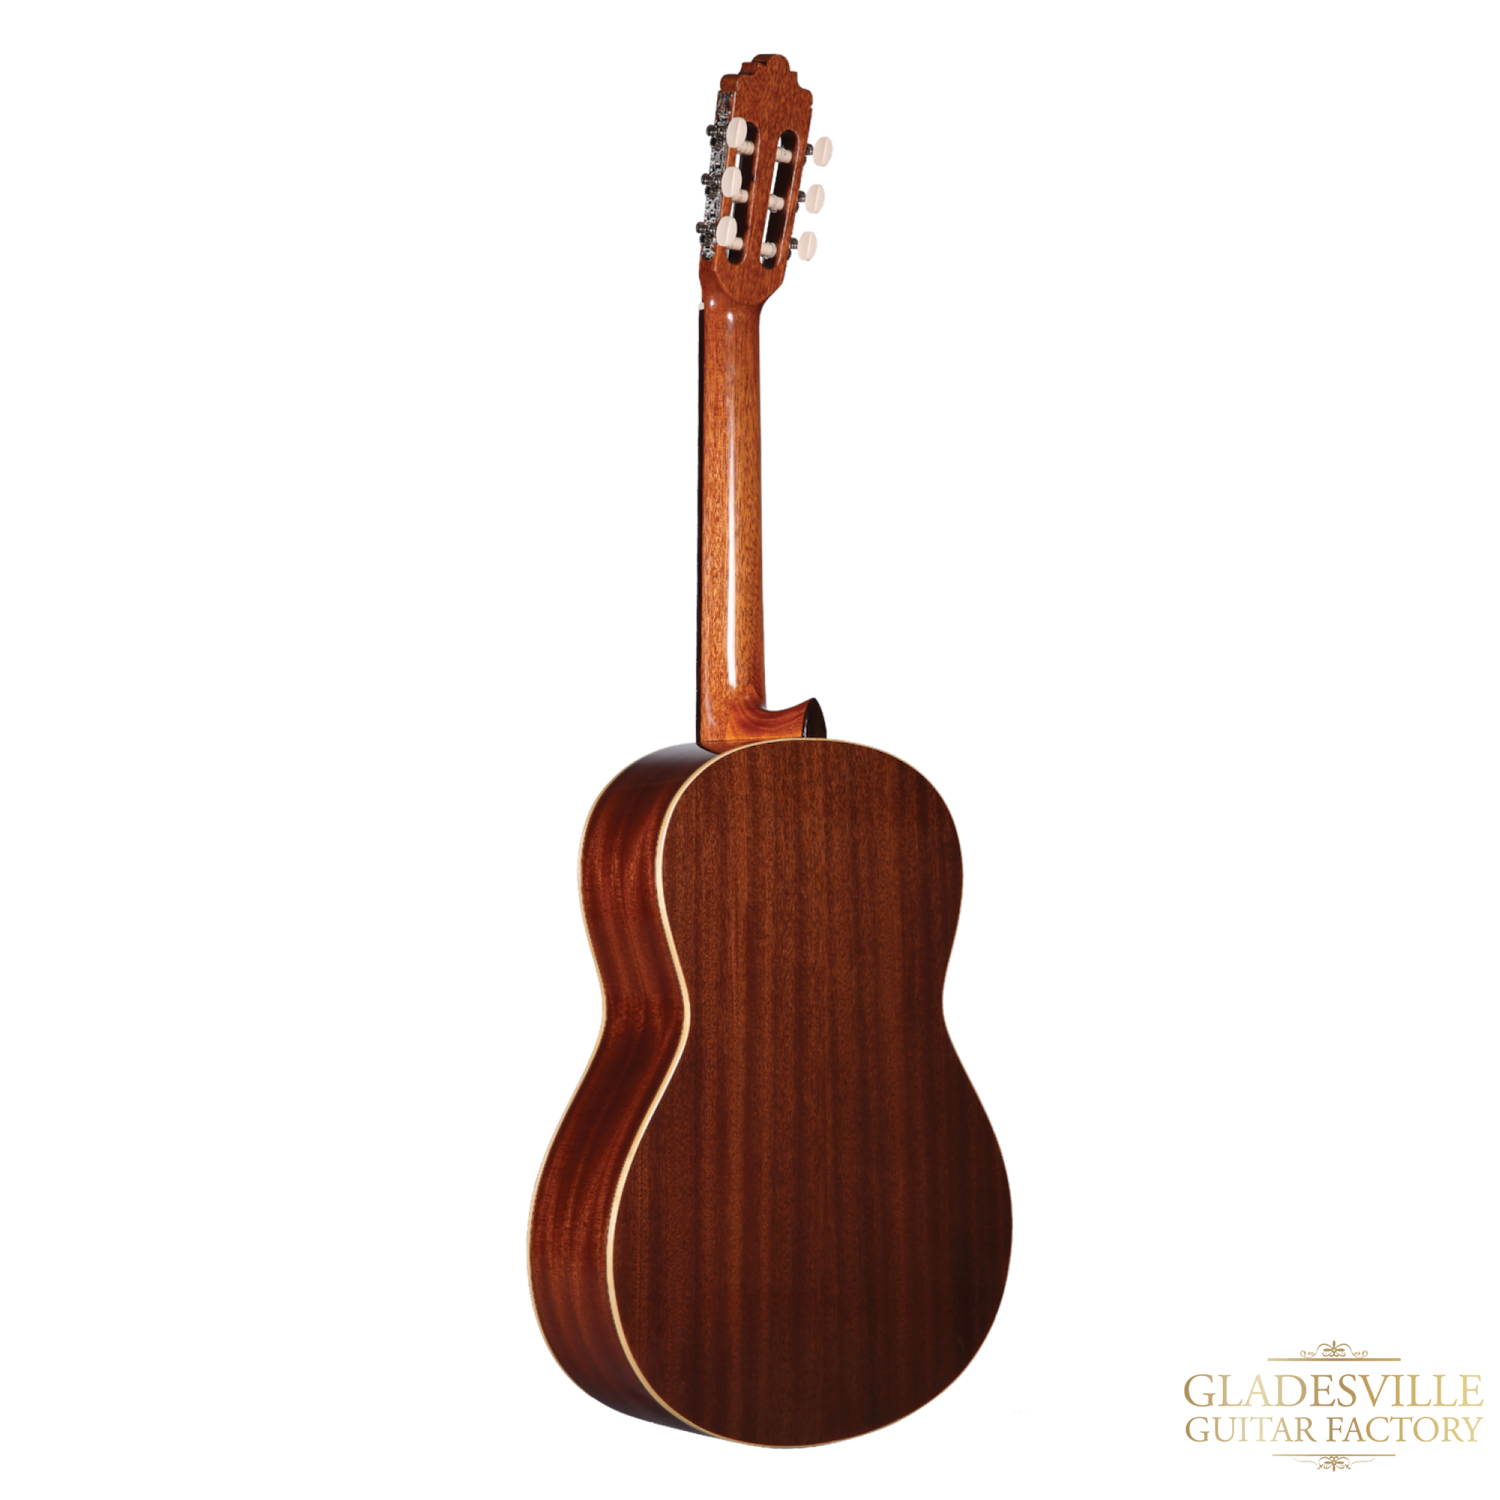 Altamira N100 1/4 Solid Cedar Top 1/4 Size Classical Guitar